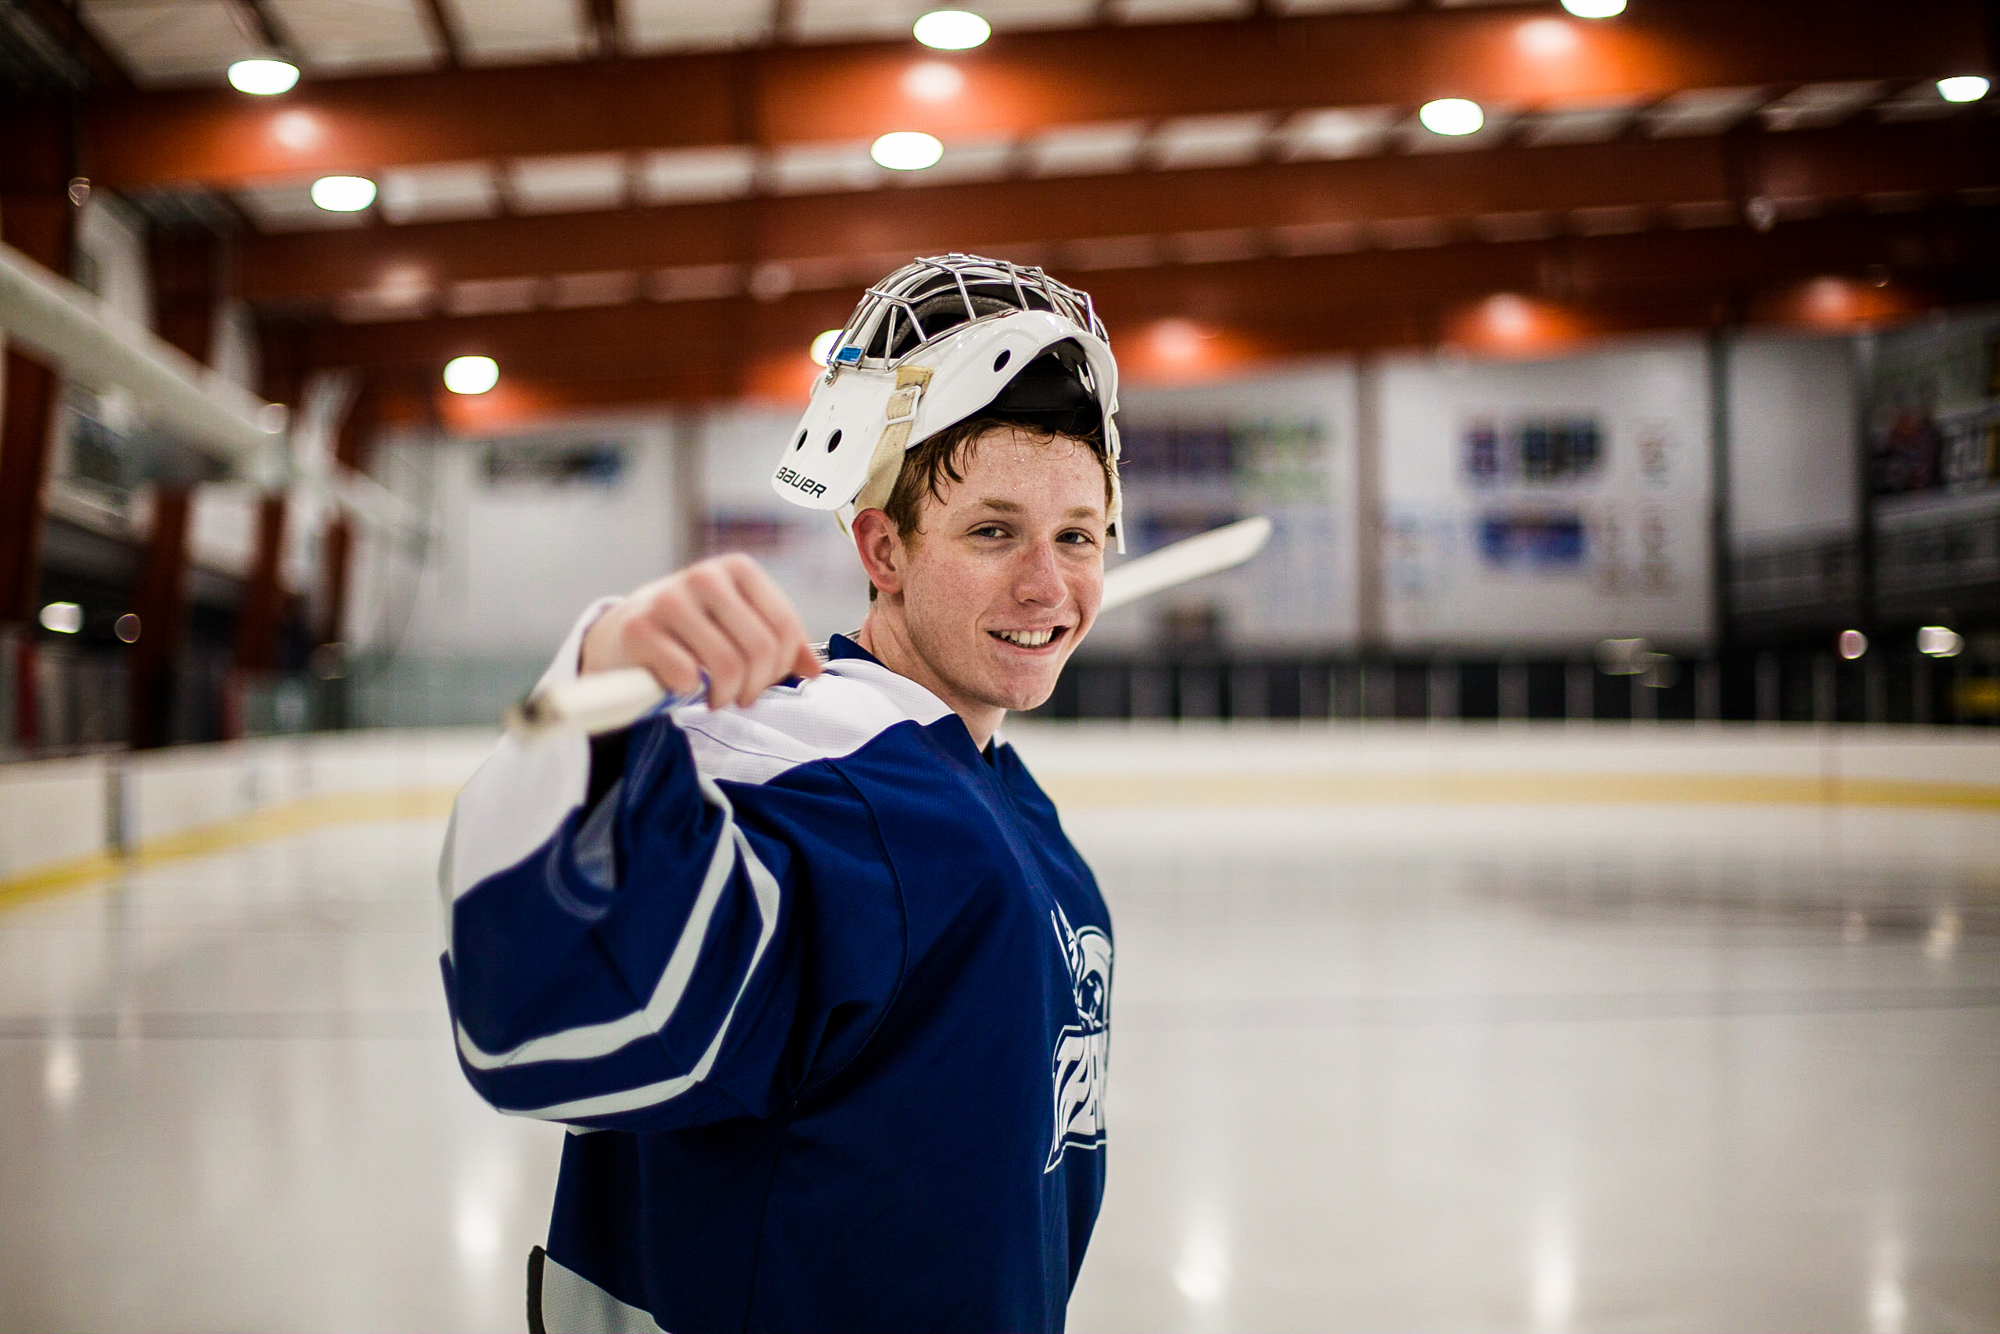 Senior photo of boy in hockey gear on the ice